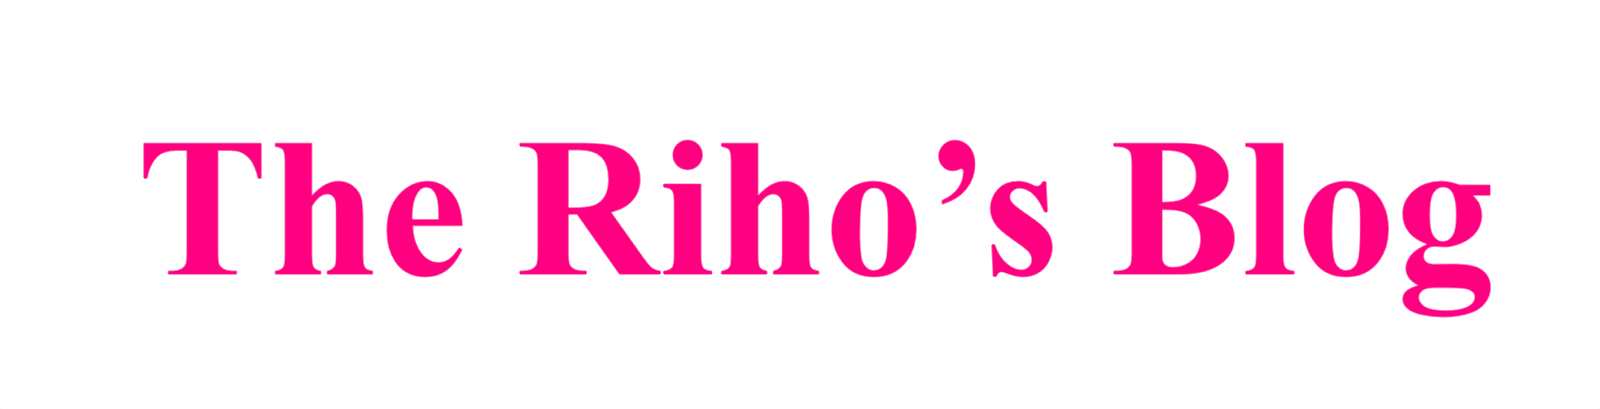 The Riho's Blog